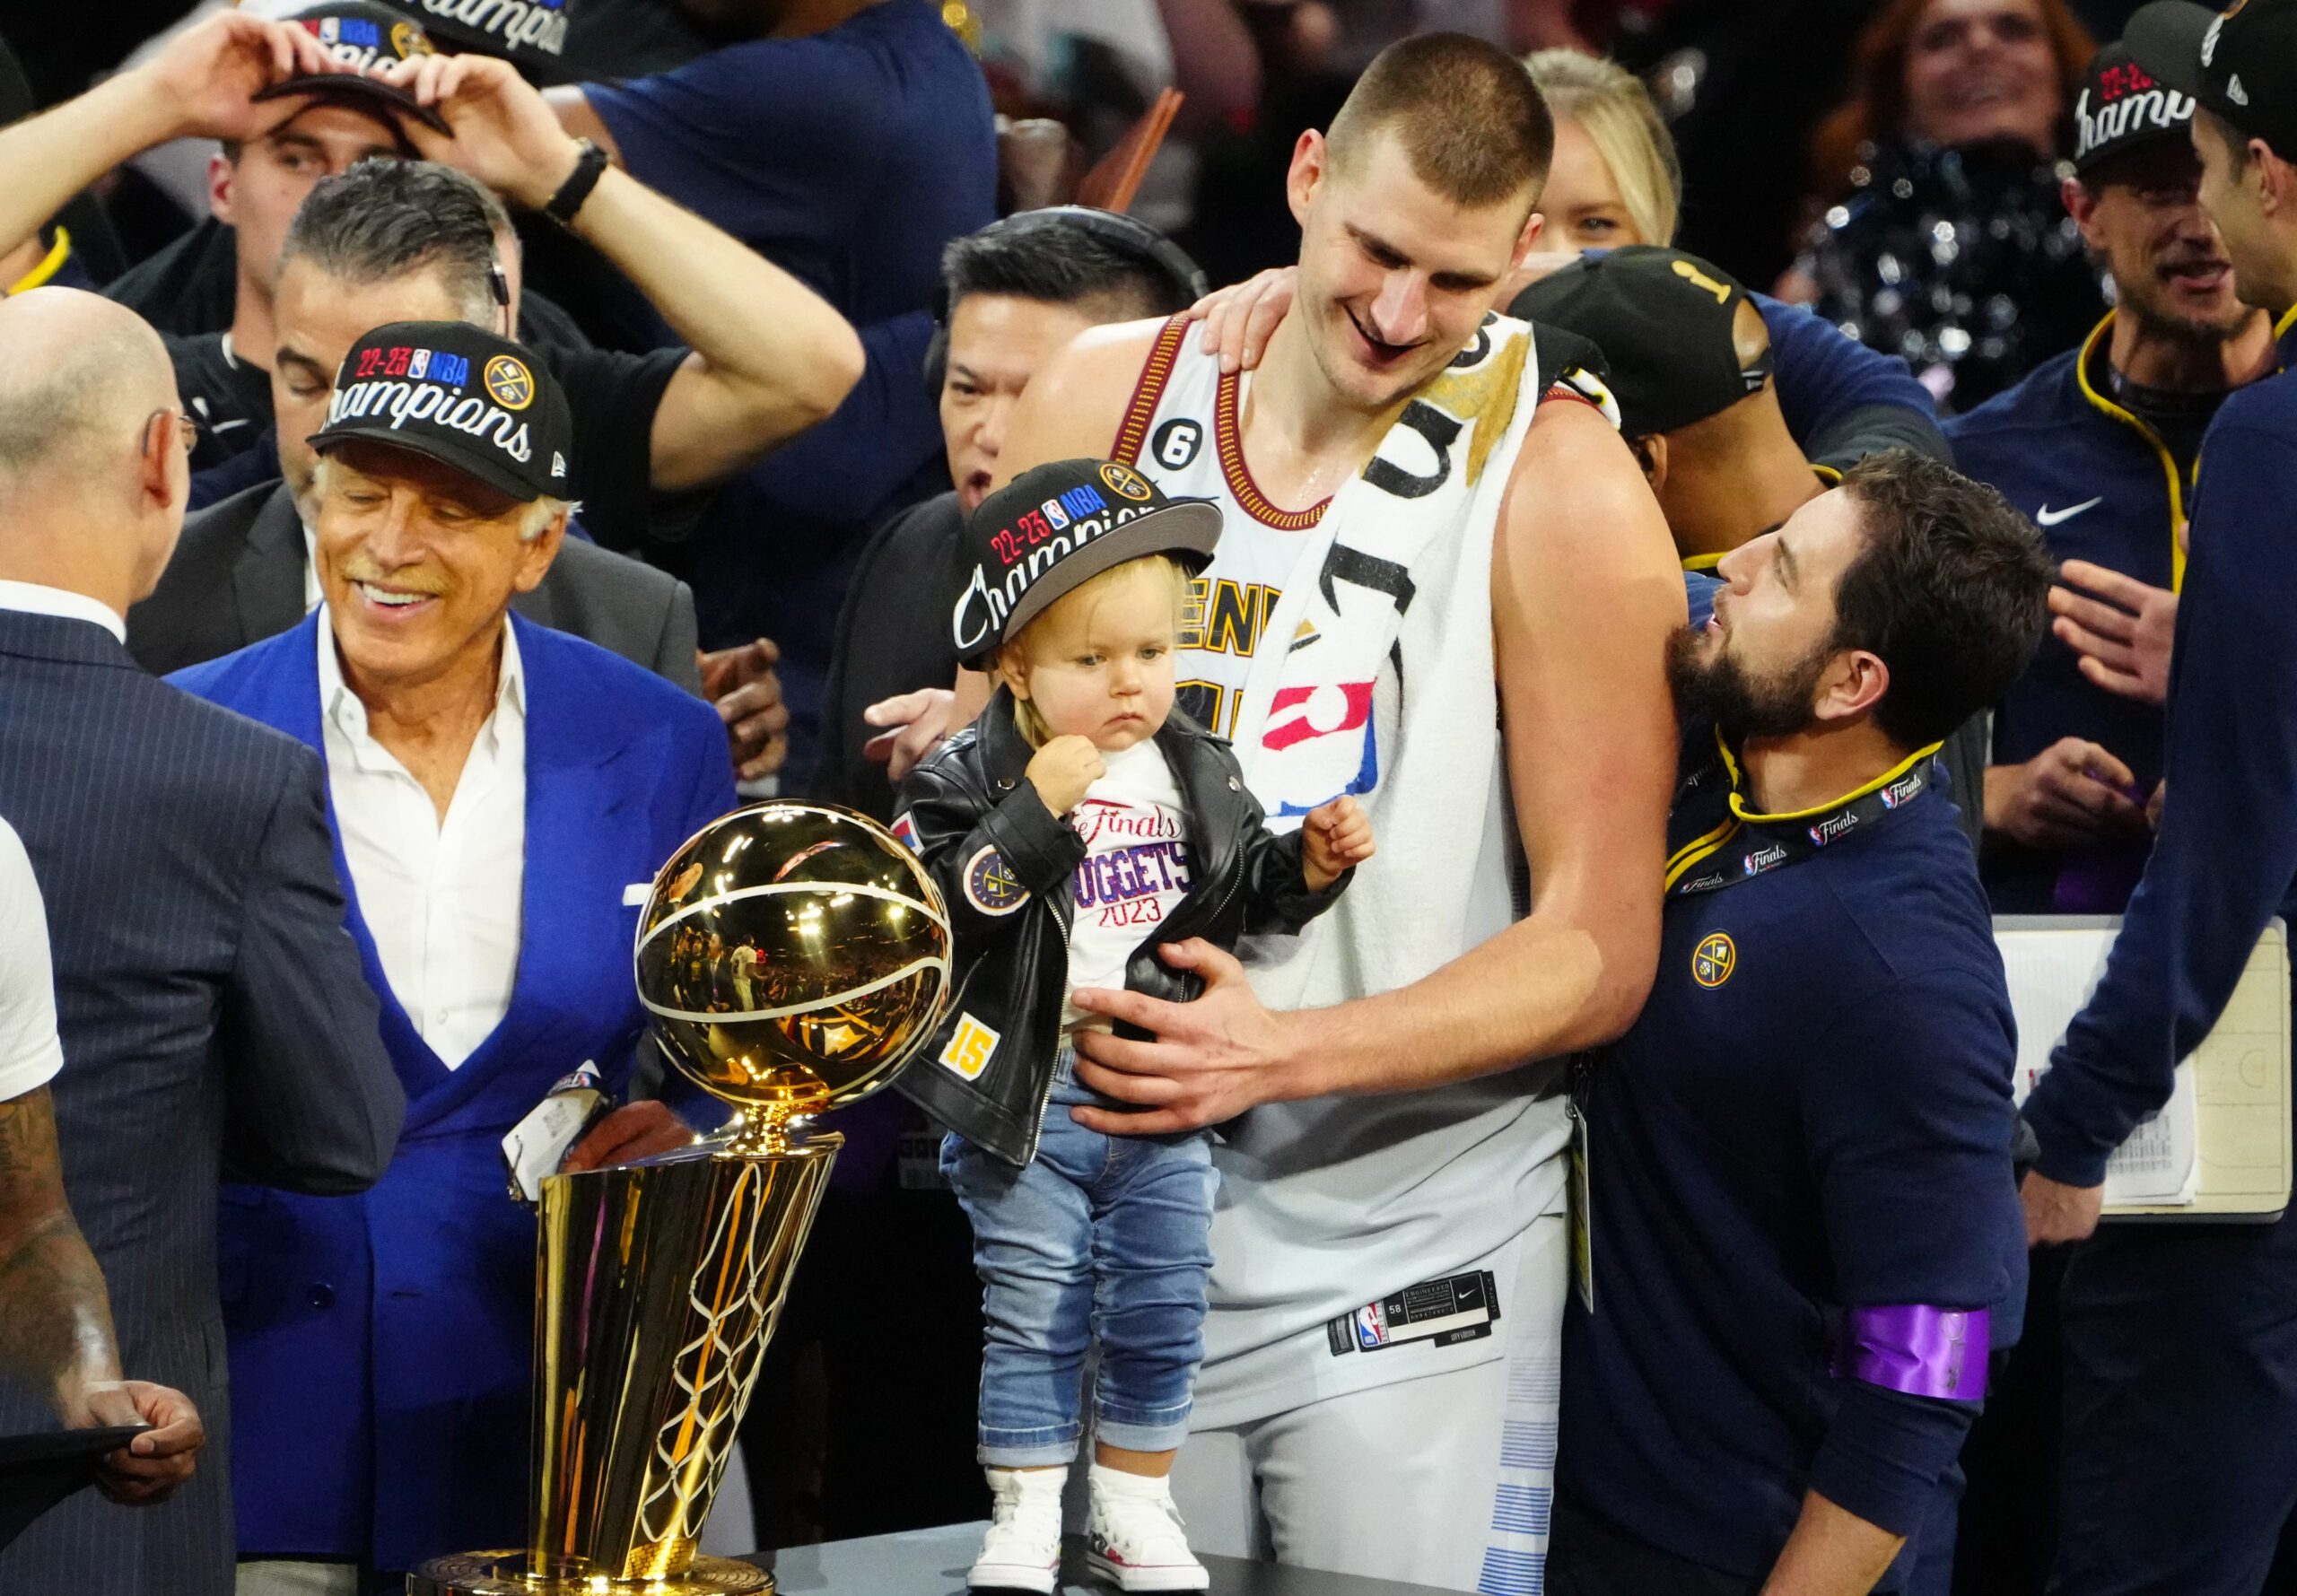 Family man Nikola Jokic set to clock out of NBA job, delayed by title parade